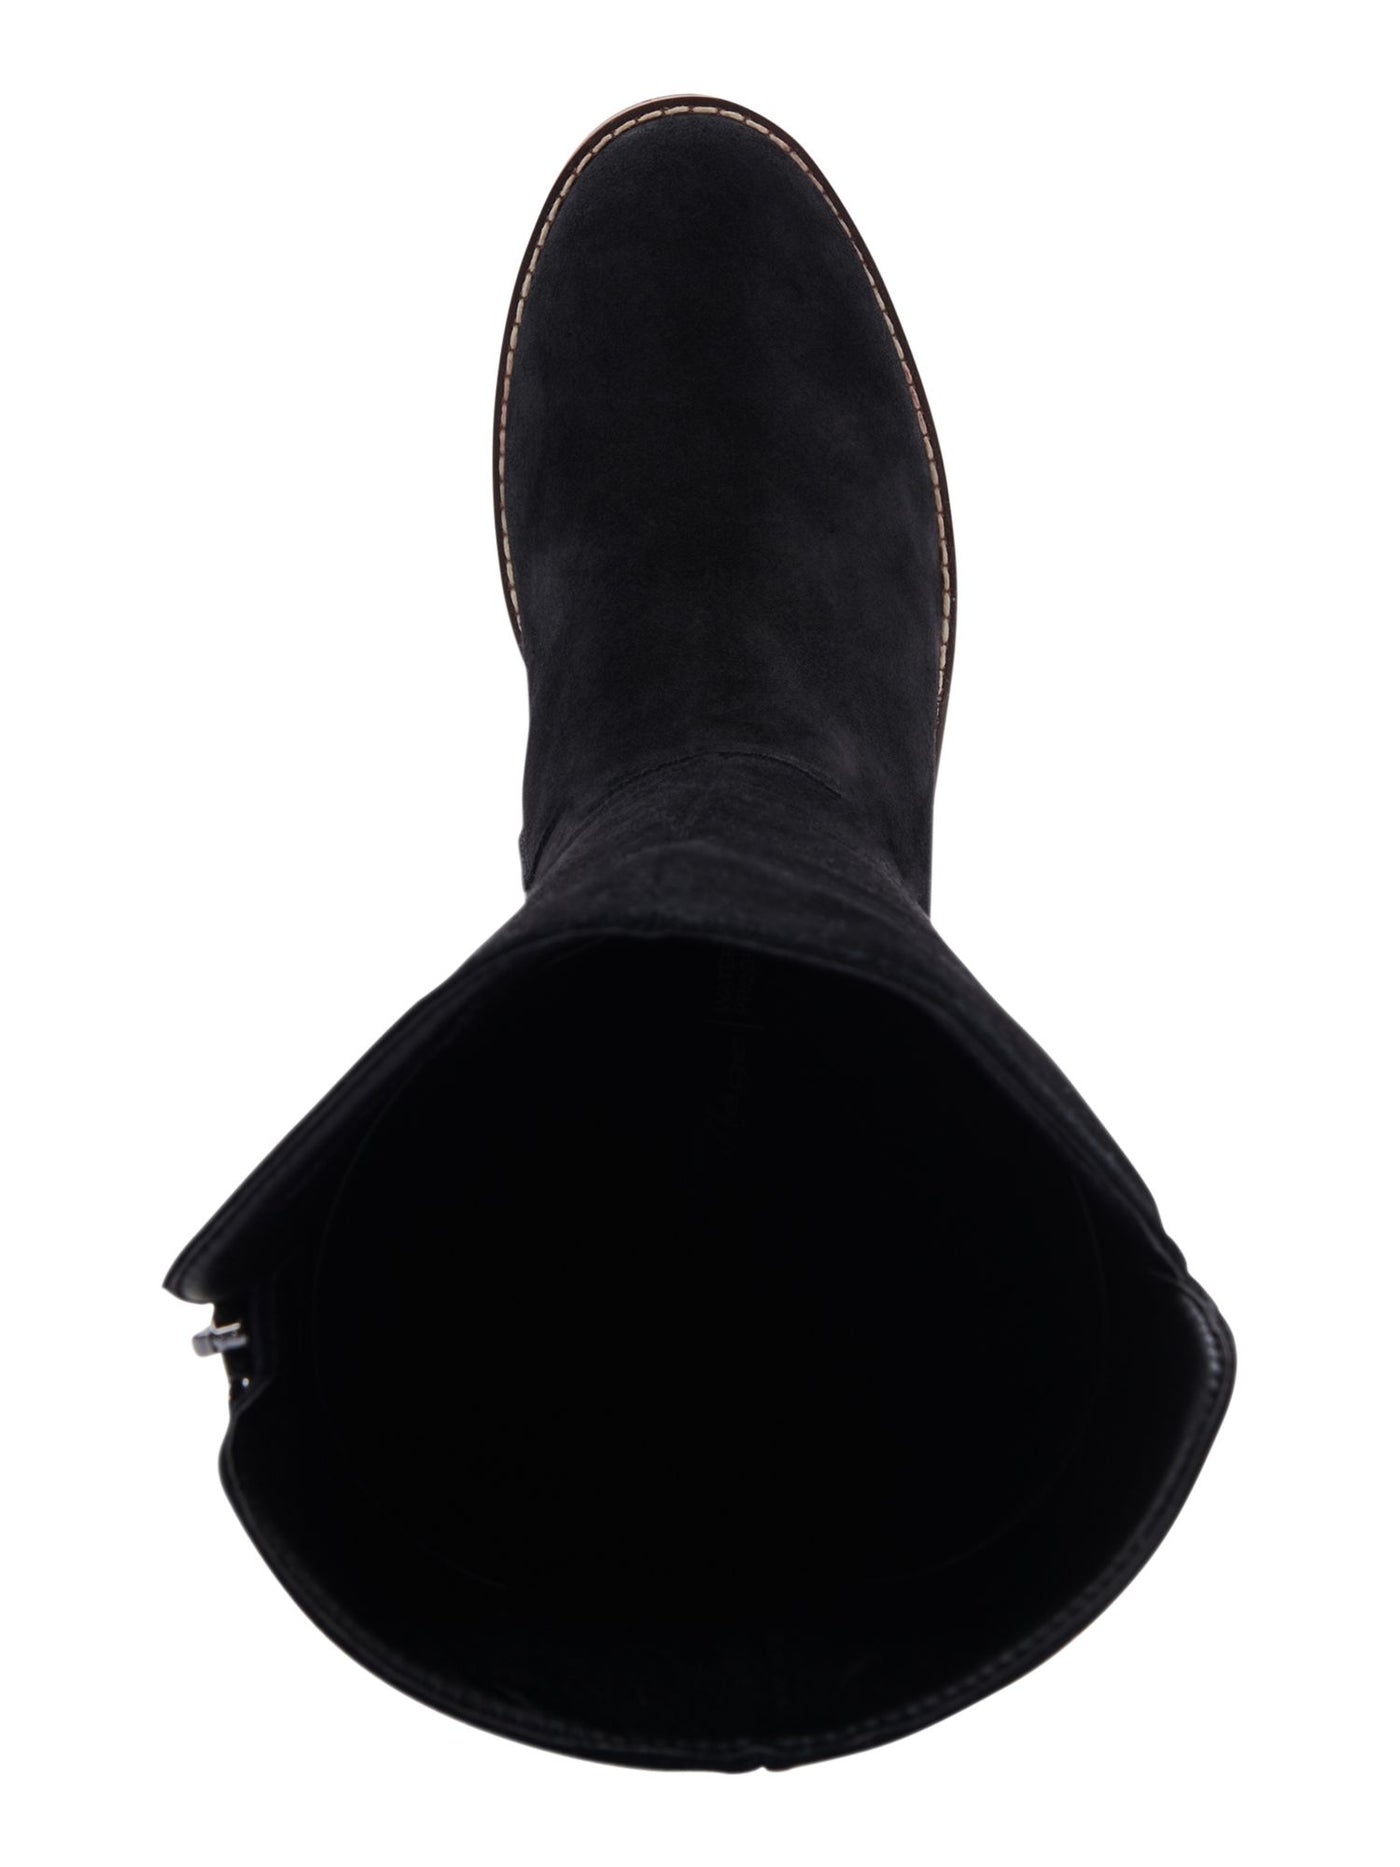 AQUA COLLEGE Womens Black Waterproof Slip Resistant Dash Round Toe Block Heel Zip-Up Riding Boot 7 M